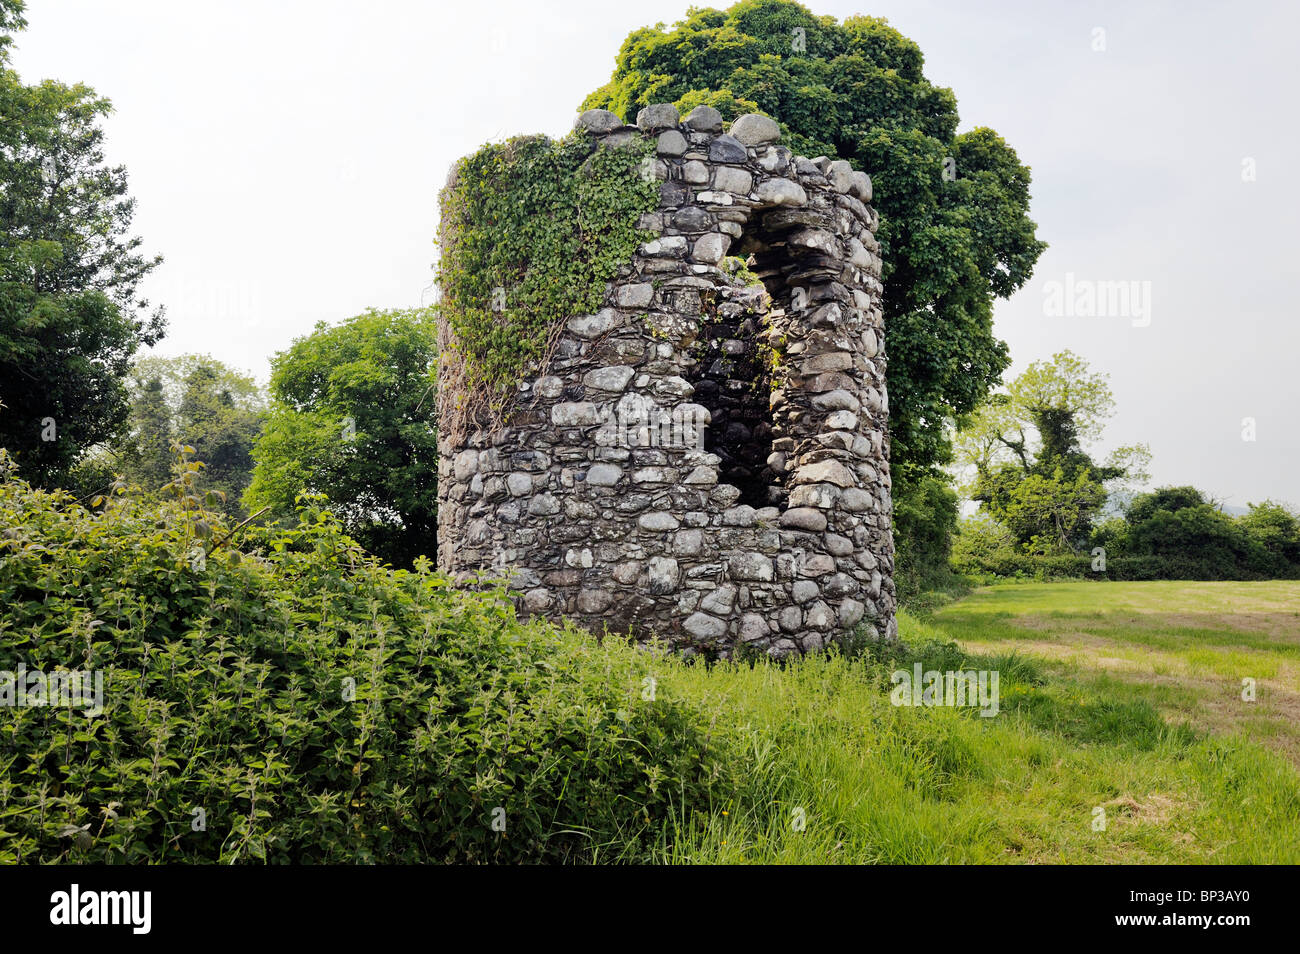 Arruinada medieval cristiana celta torre redonda en la antigua iglesia de S. Maghera Donairt. Castlewellan, Condado de Down, Irlanda del Norte Foto de stock